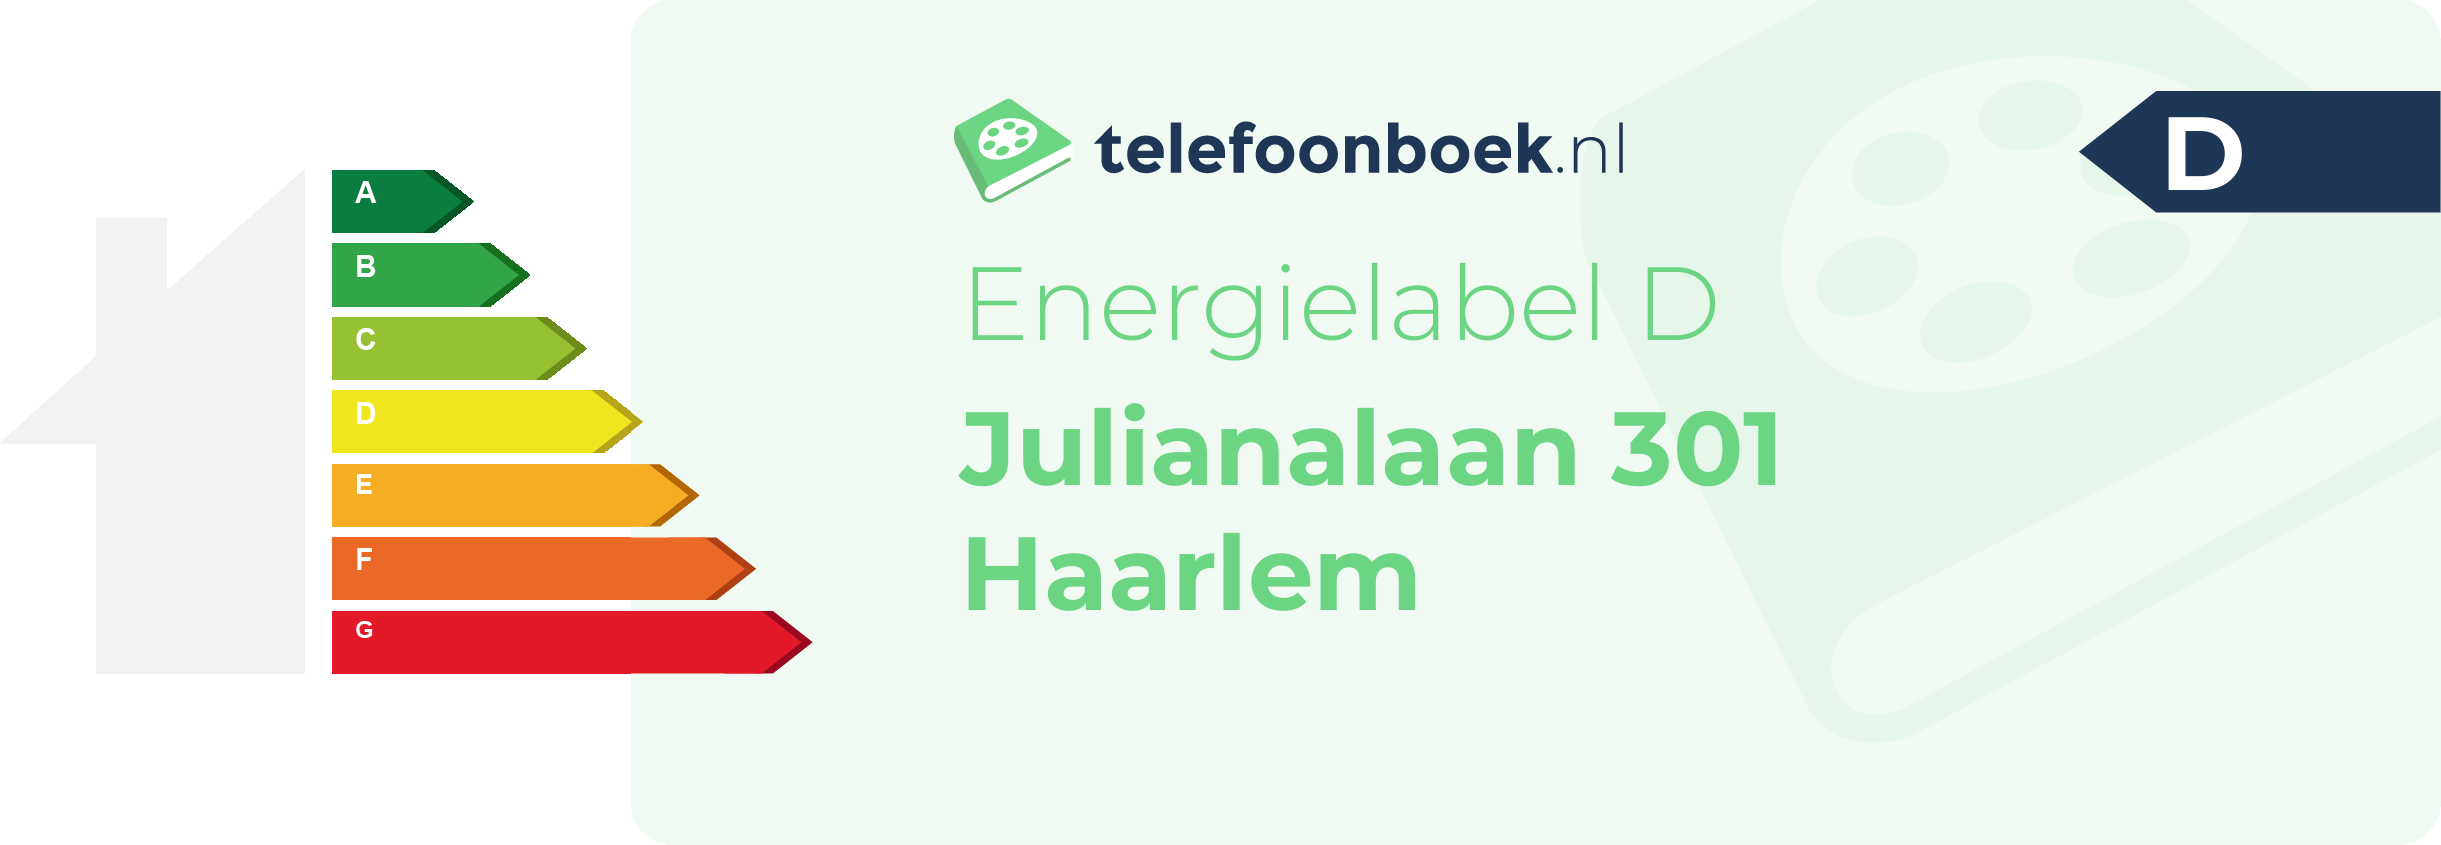 Energielabel Julianalaan 301 Haarlem